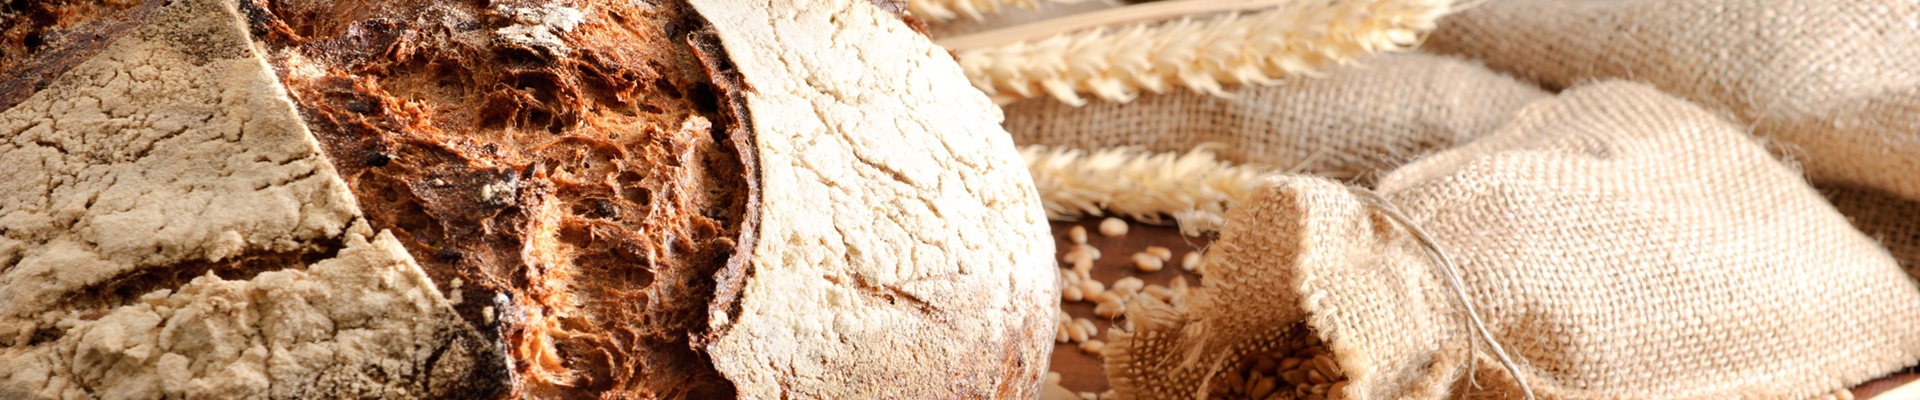 Galician bread workshop